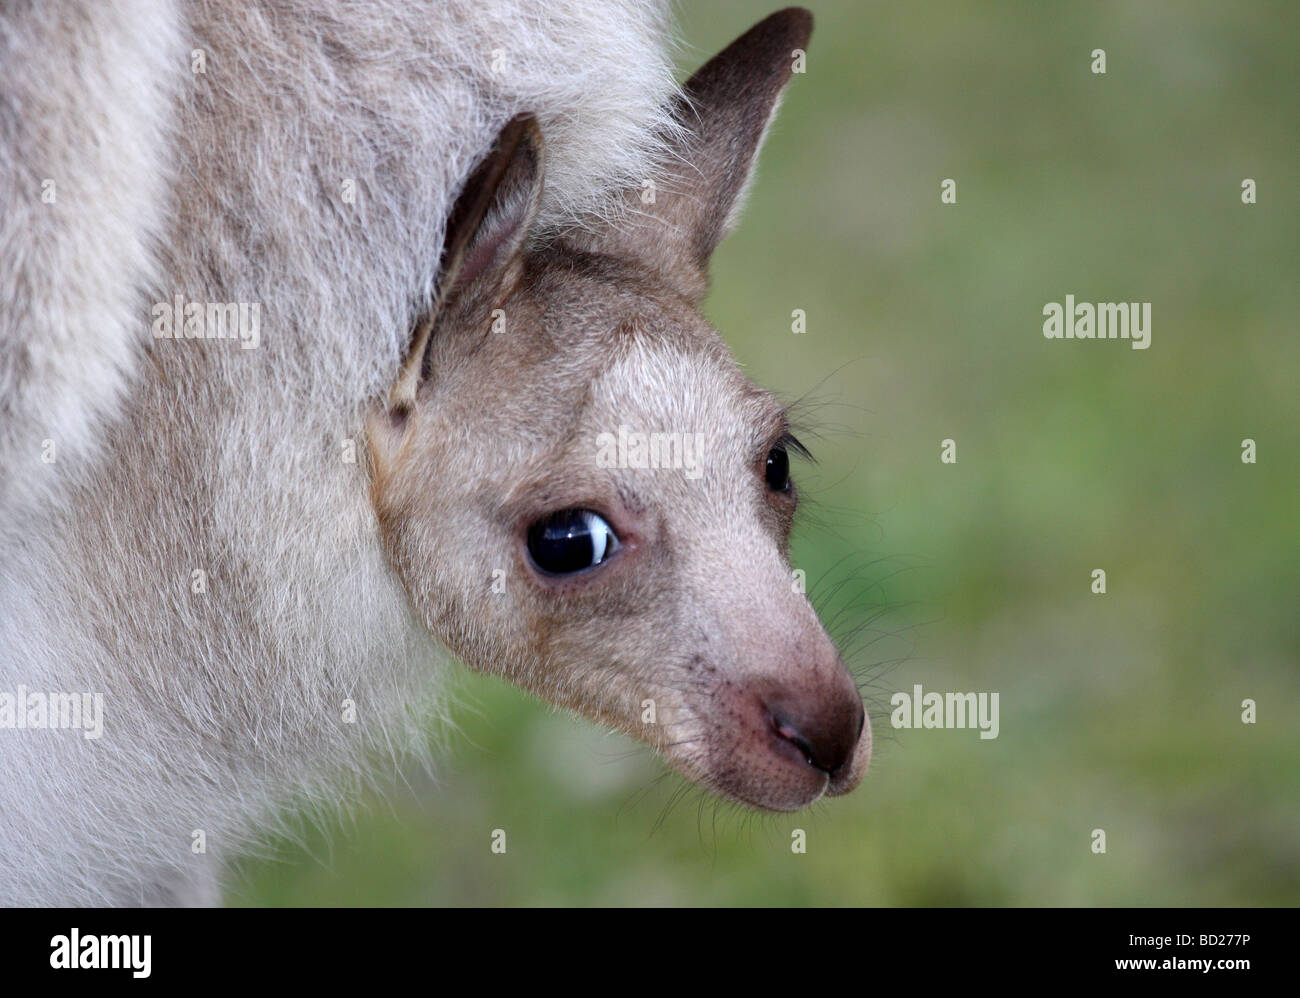 Känguru beutel -Fotos und -Bildmaterial in hoher Auflösung – Alamy